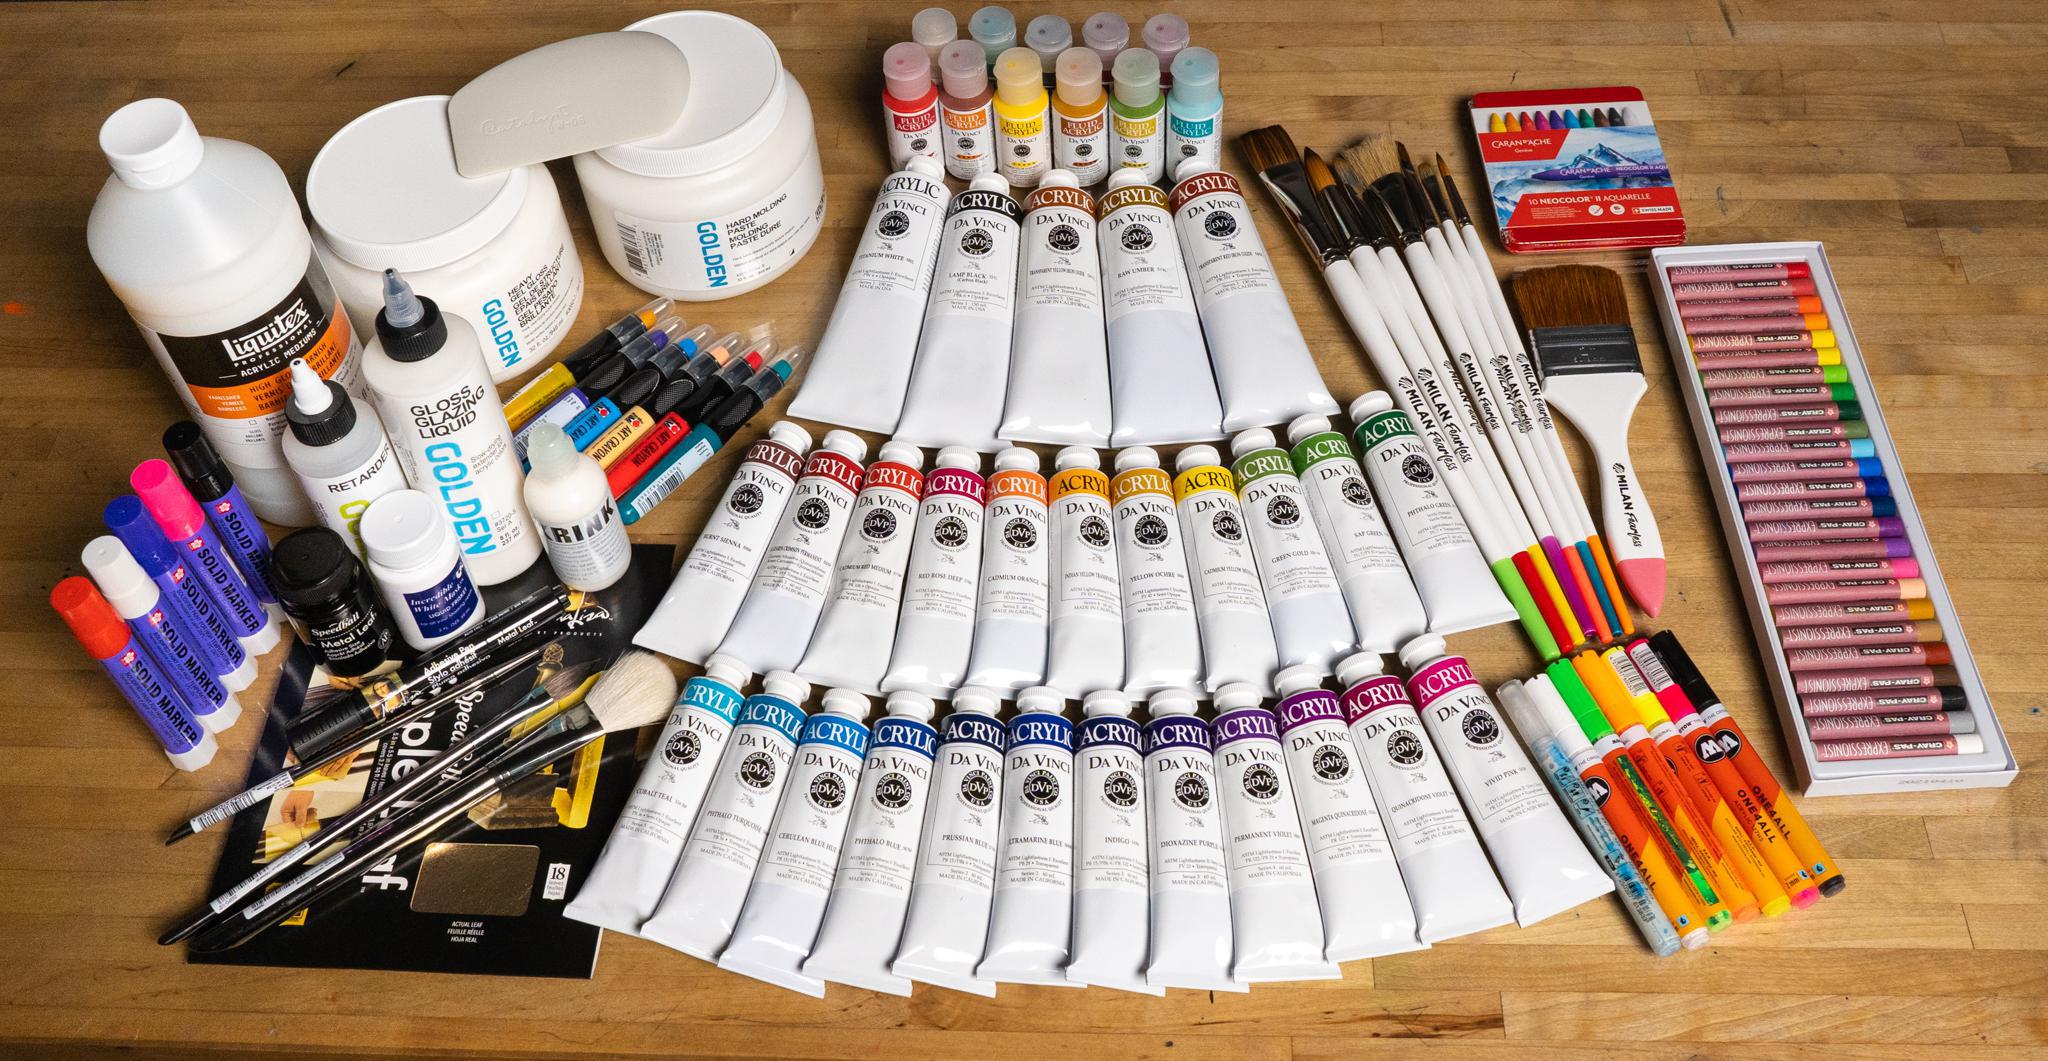 TOOLI-ART Acrylic Paint Markers Paint Pens Special Nigeria